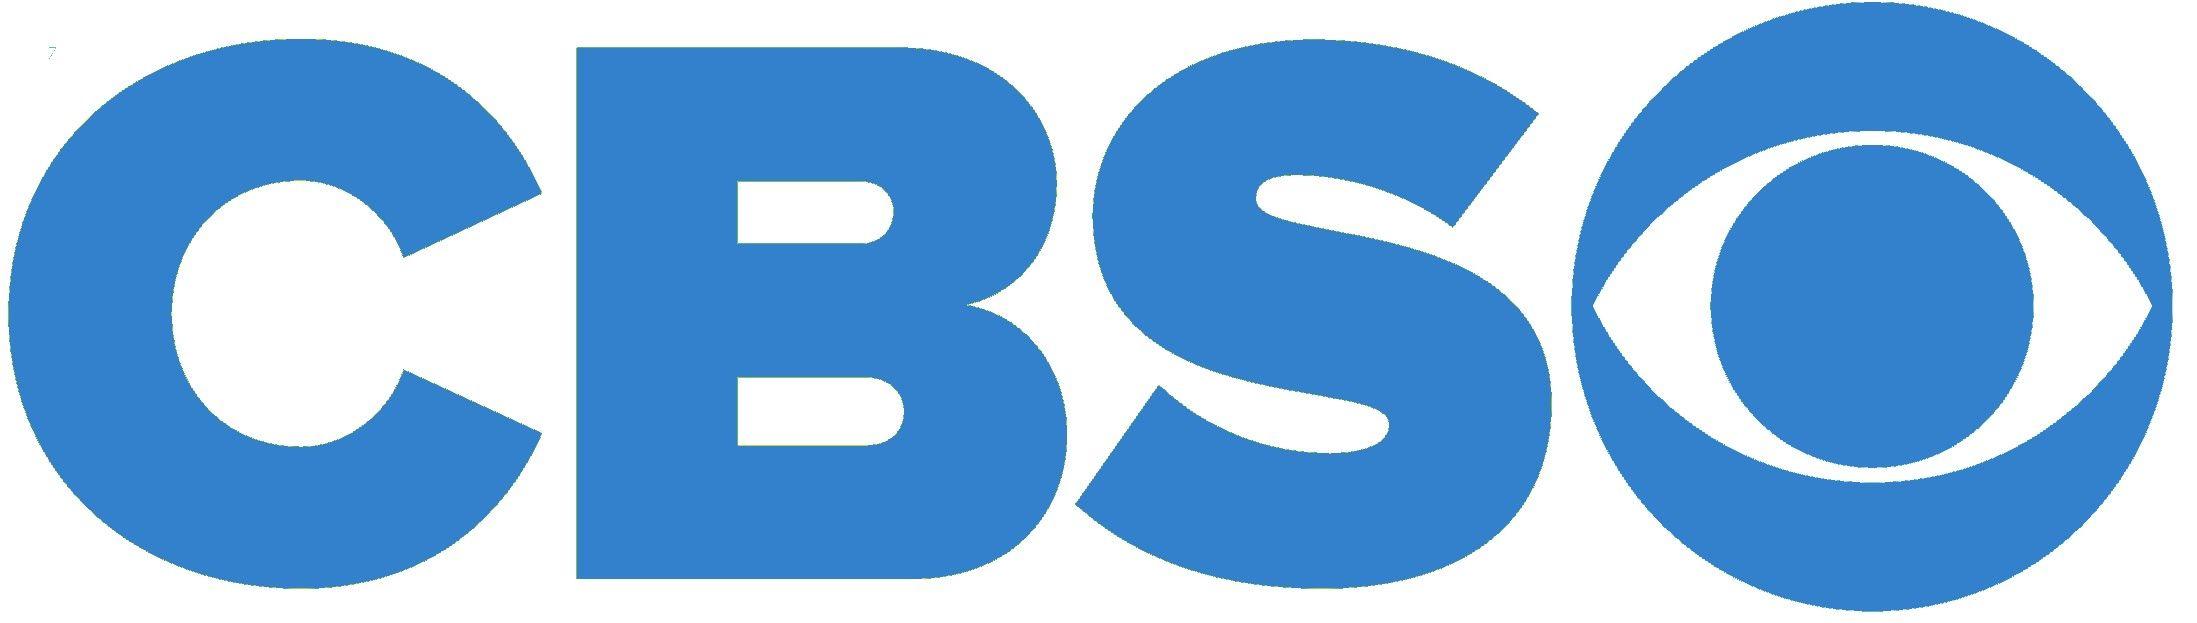 CBS Logo - CBS-Logo - La Marcha Berkeley